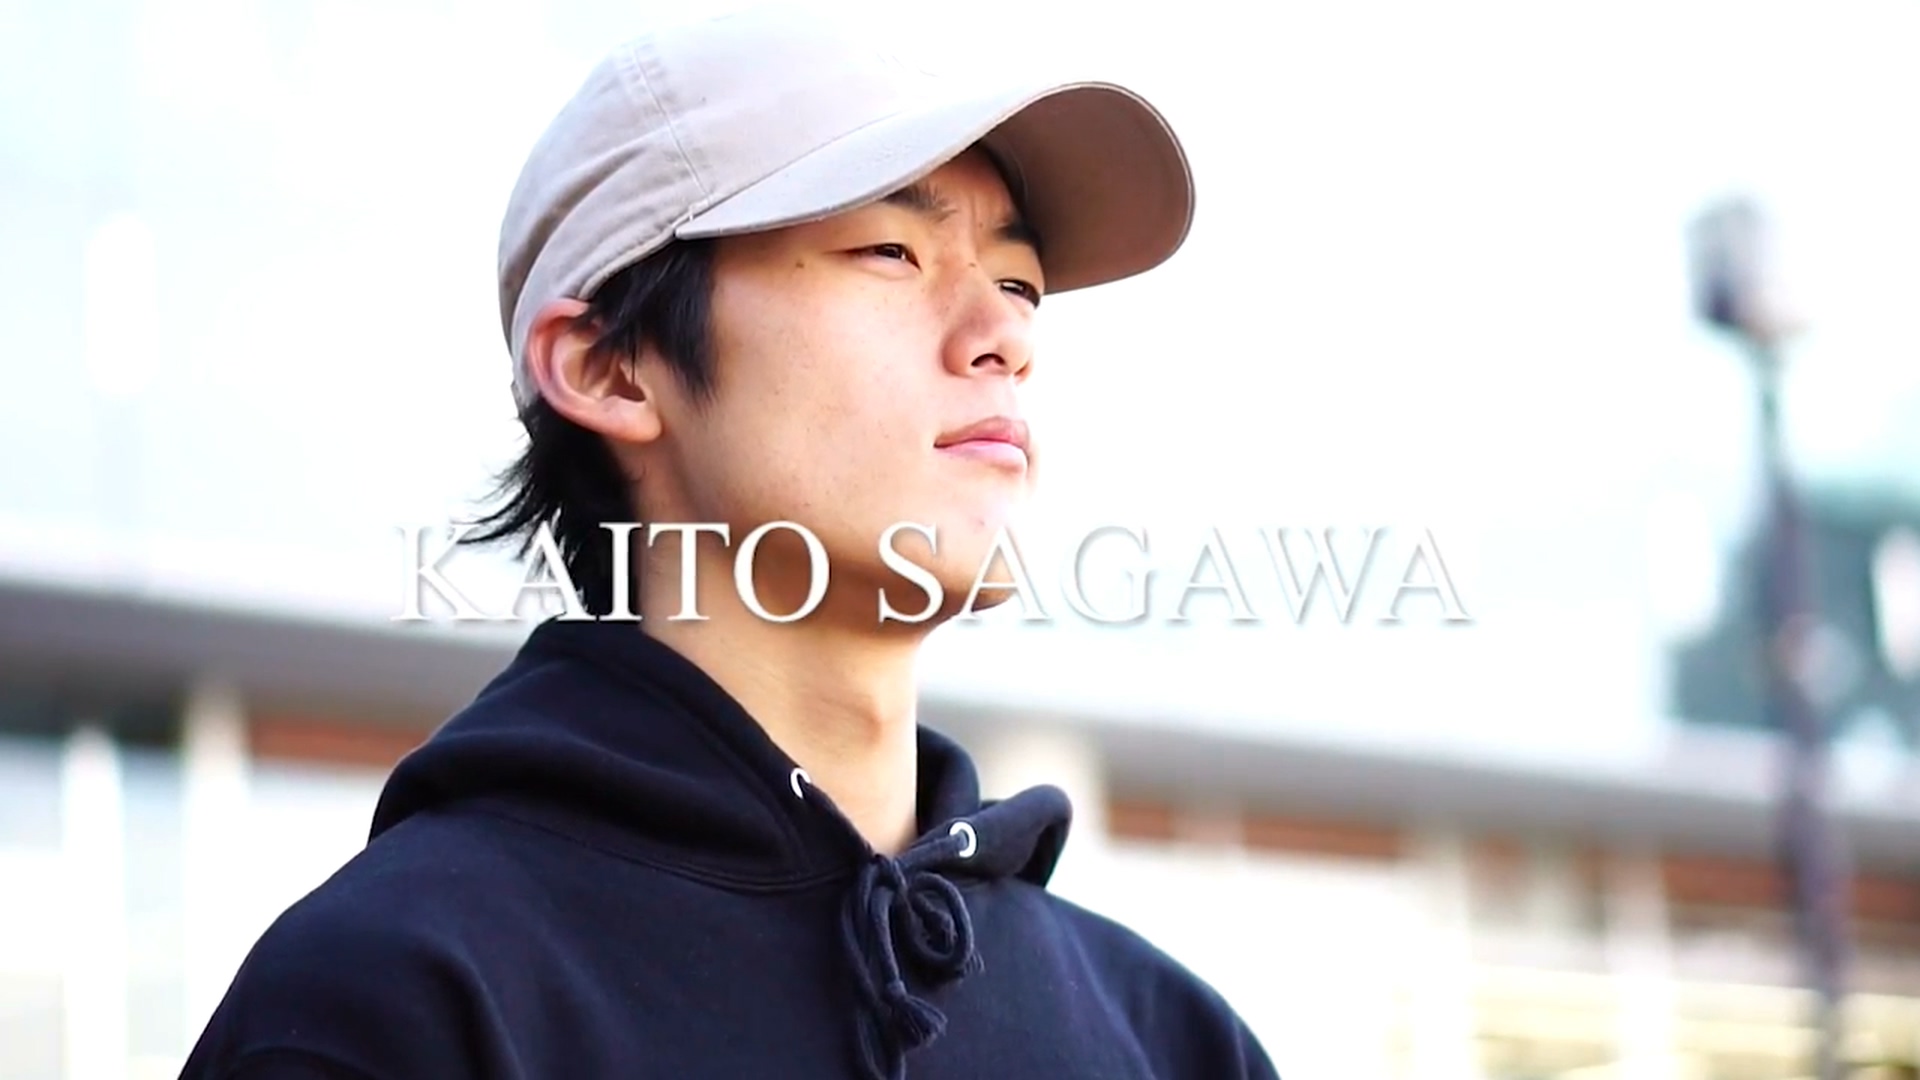 KAITO SAGAWA PRO DEBUT PART - IFO SKATEBOARD.mp4_20180118_184044.571